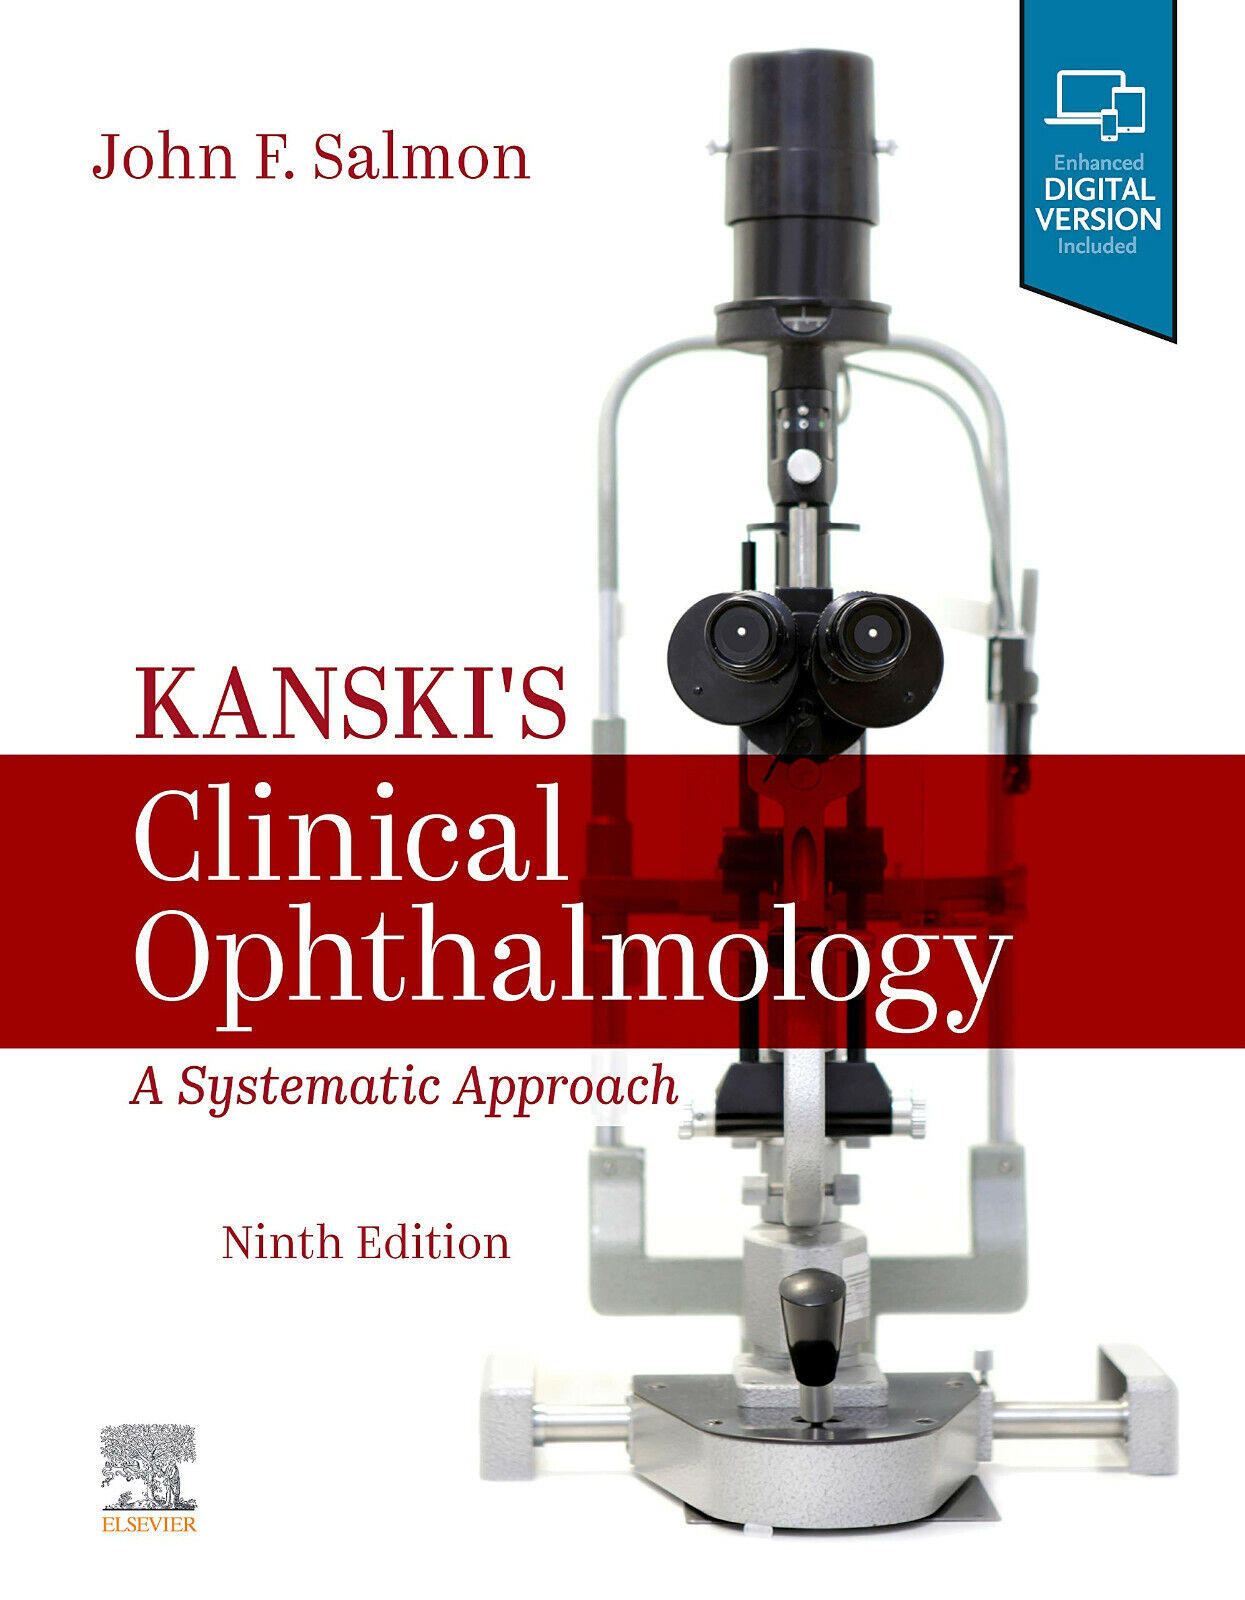 Kanski's Clinical Ophthalmology - John Salmon - Elsevier, 2019